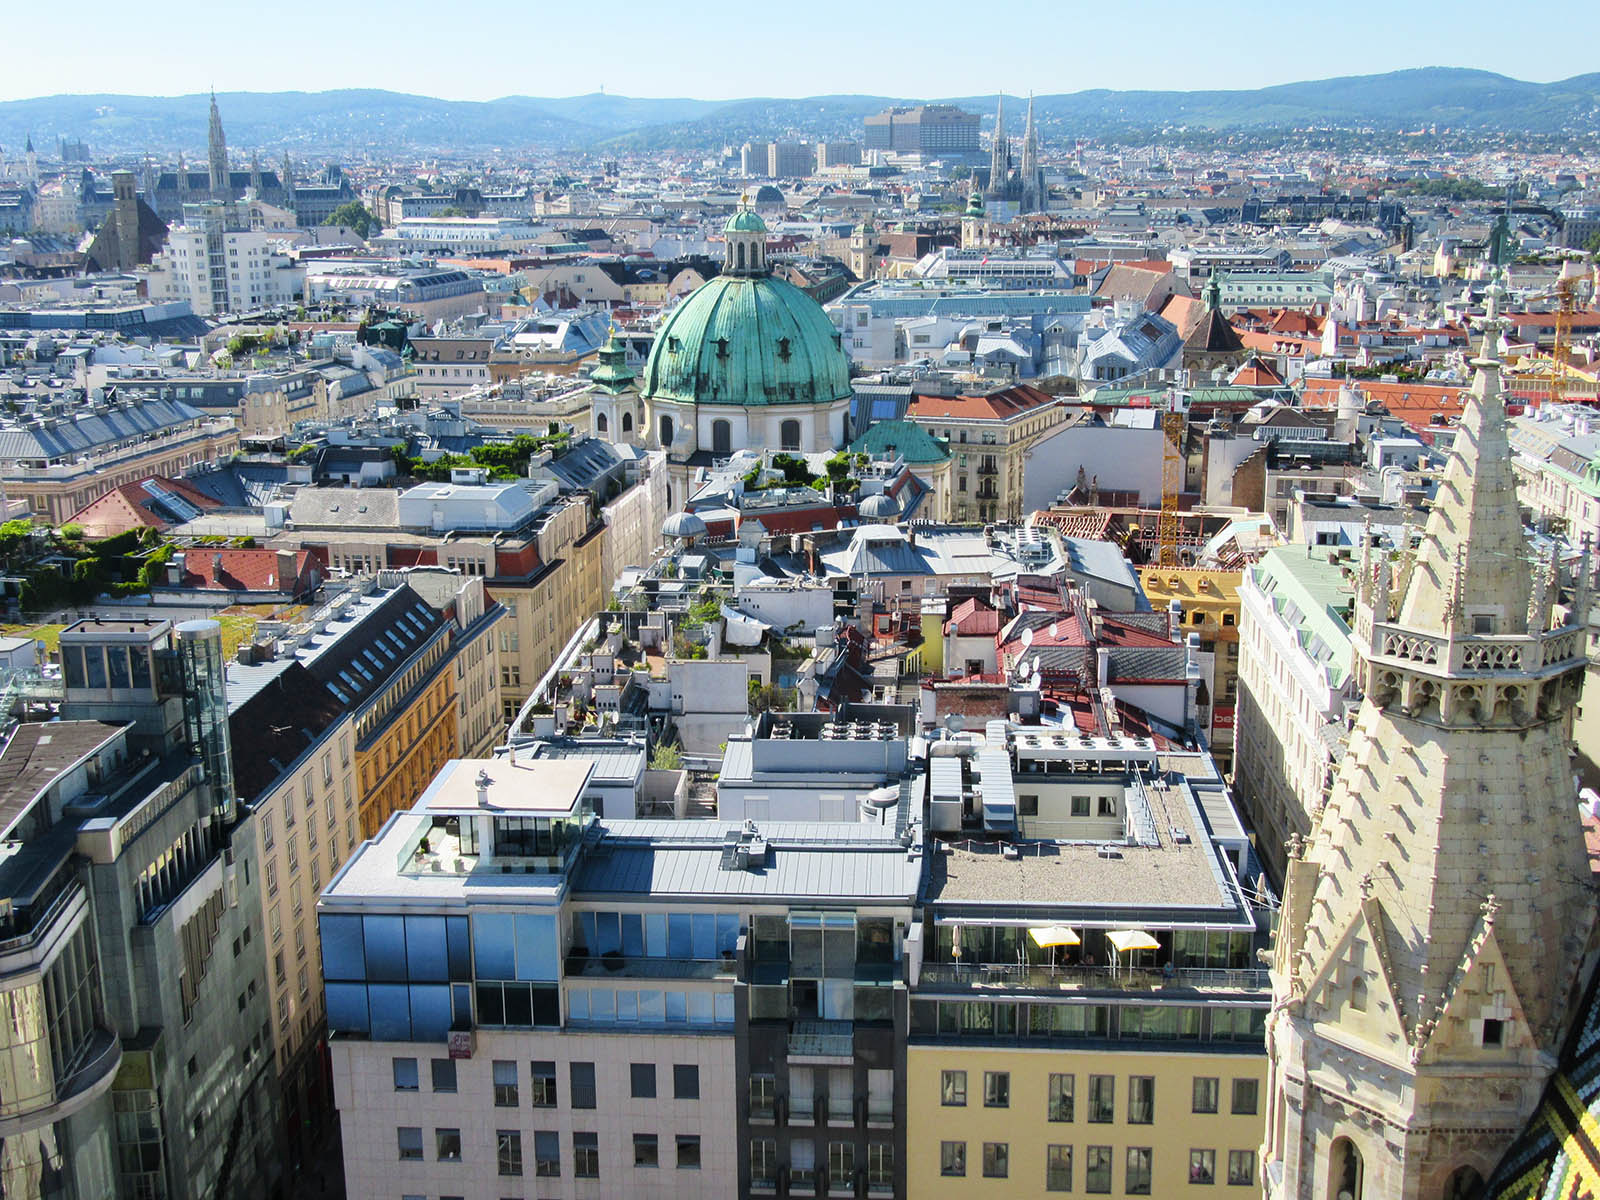 Vienna from above. Credit: Carolina Valenzuela